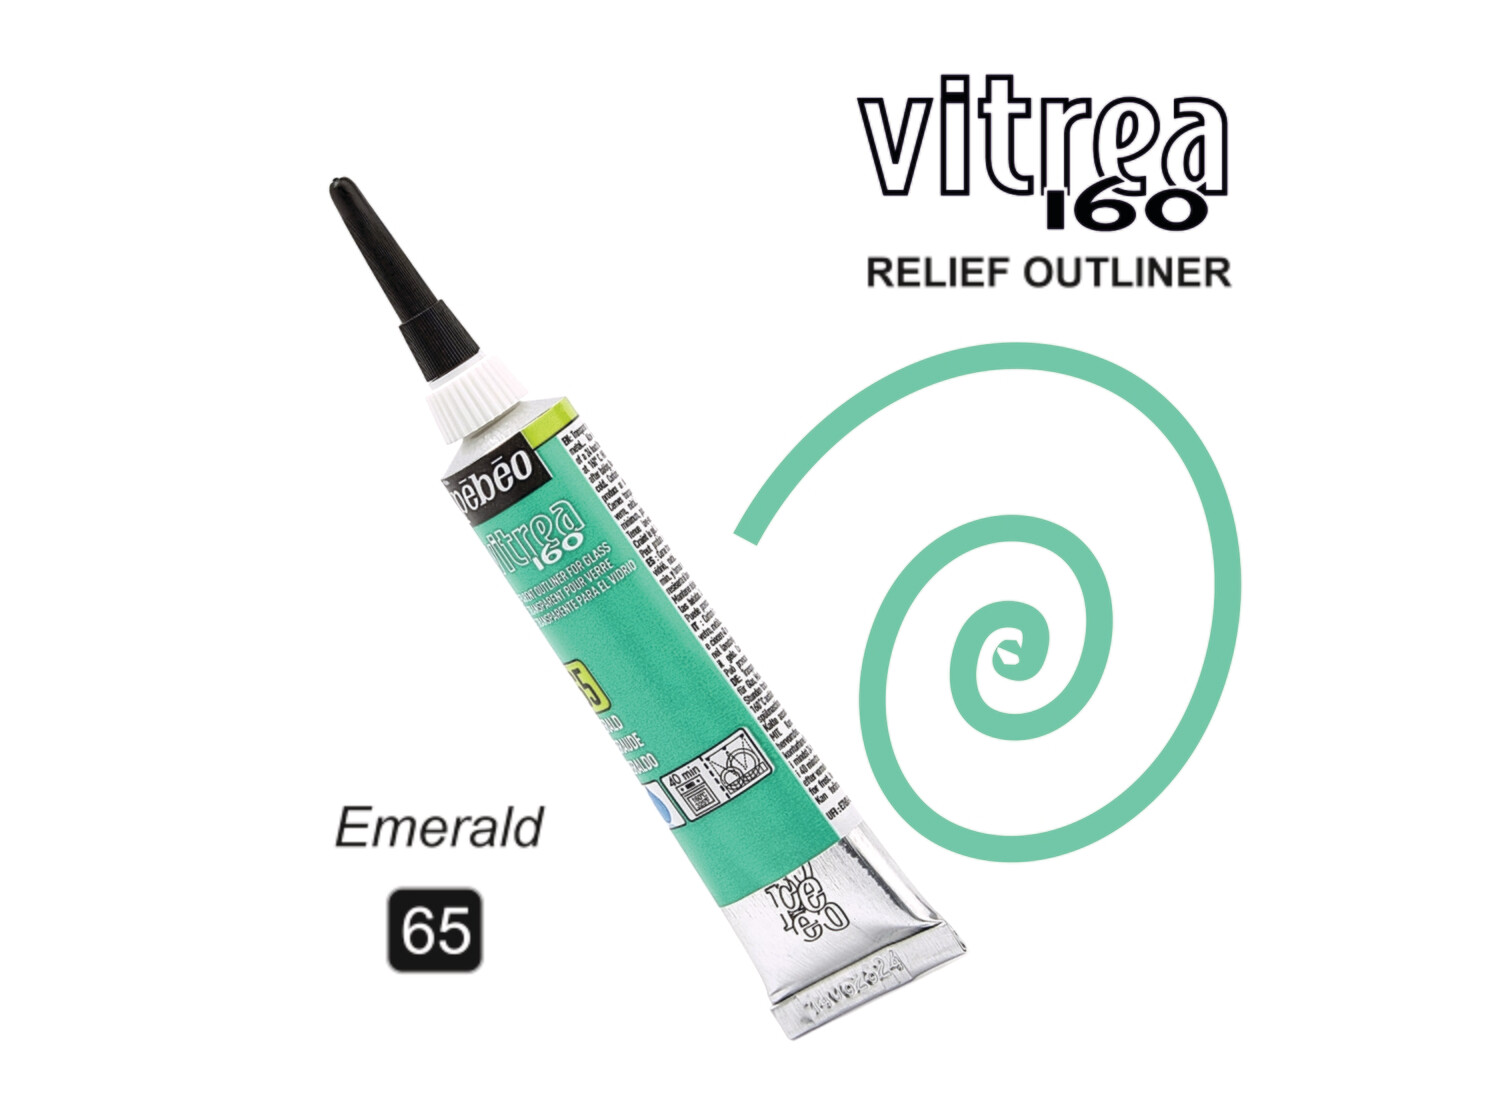 Vitrea-160 20ml 65 Emerald